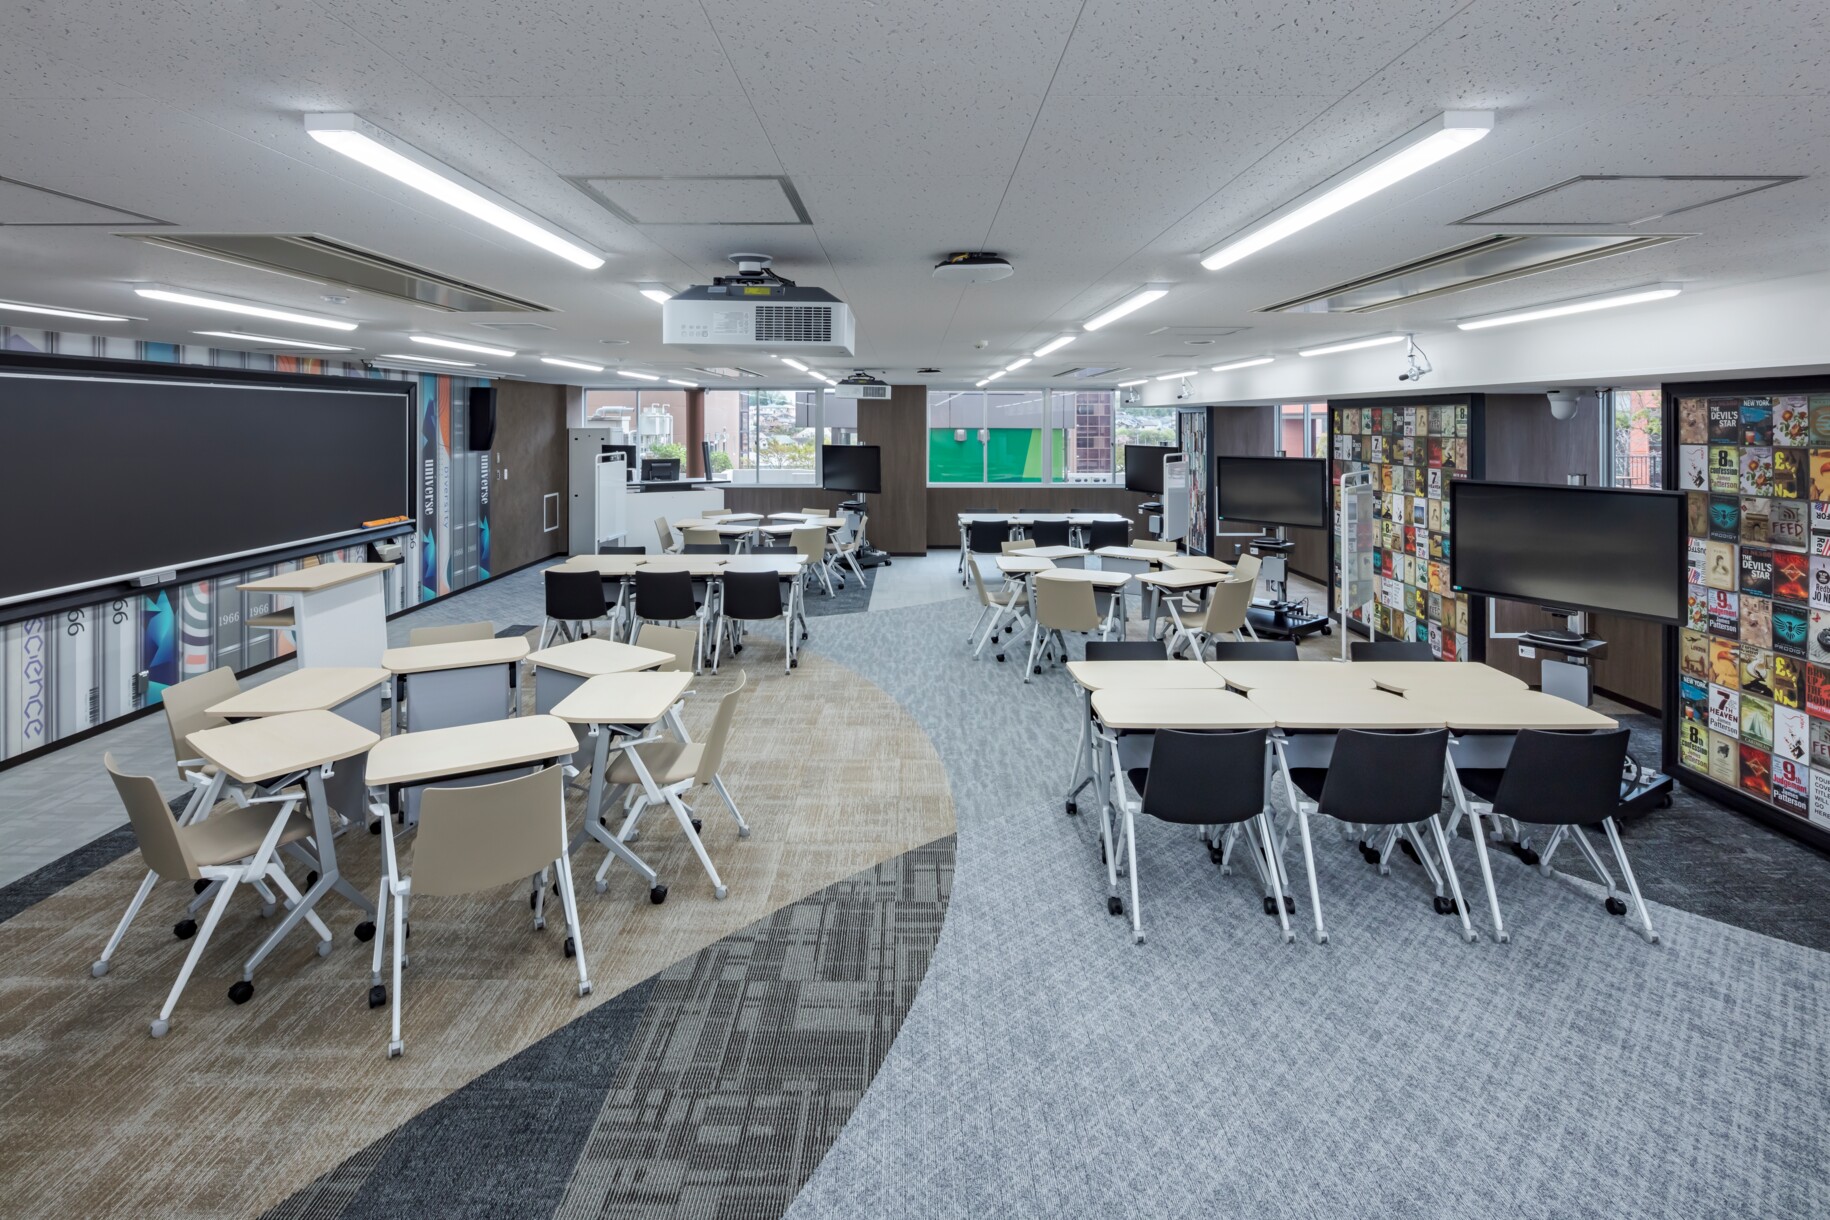 Active learning classroom Teikyo University, Tokyo, Japan